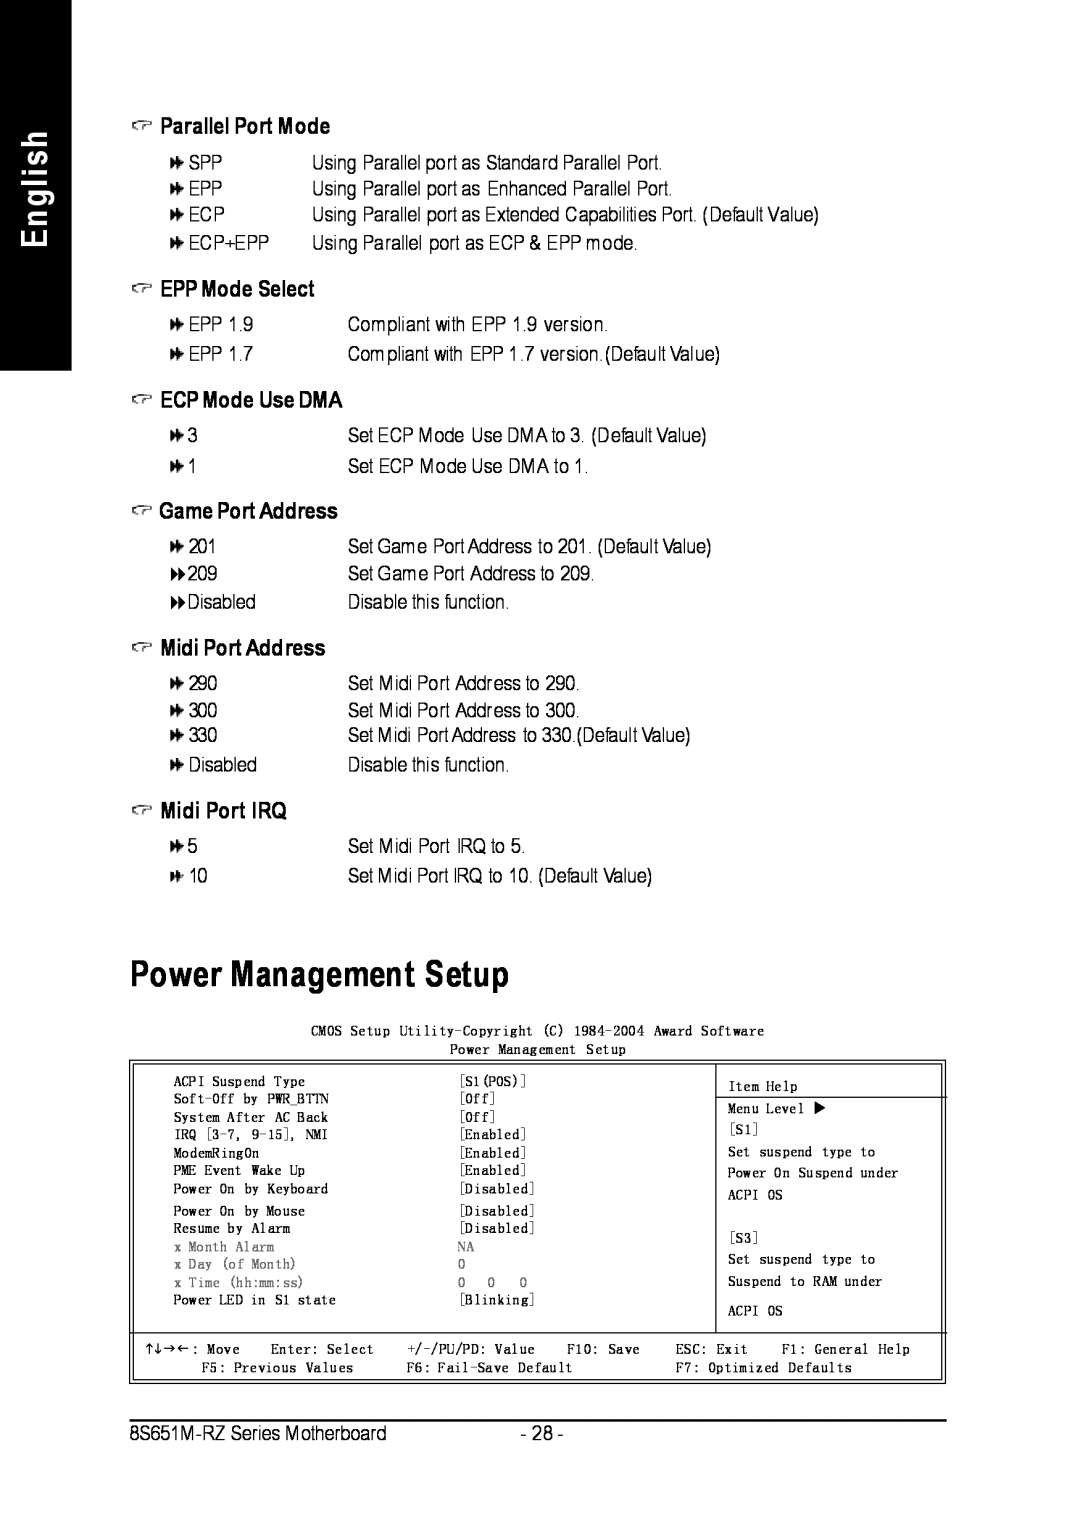 Intel 8S651M-RZ-C Power Management Setup, English, Parallel Port Mode, EPP Mode Select, ECP Mode Use DMA, Midi Port IRQ 